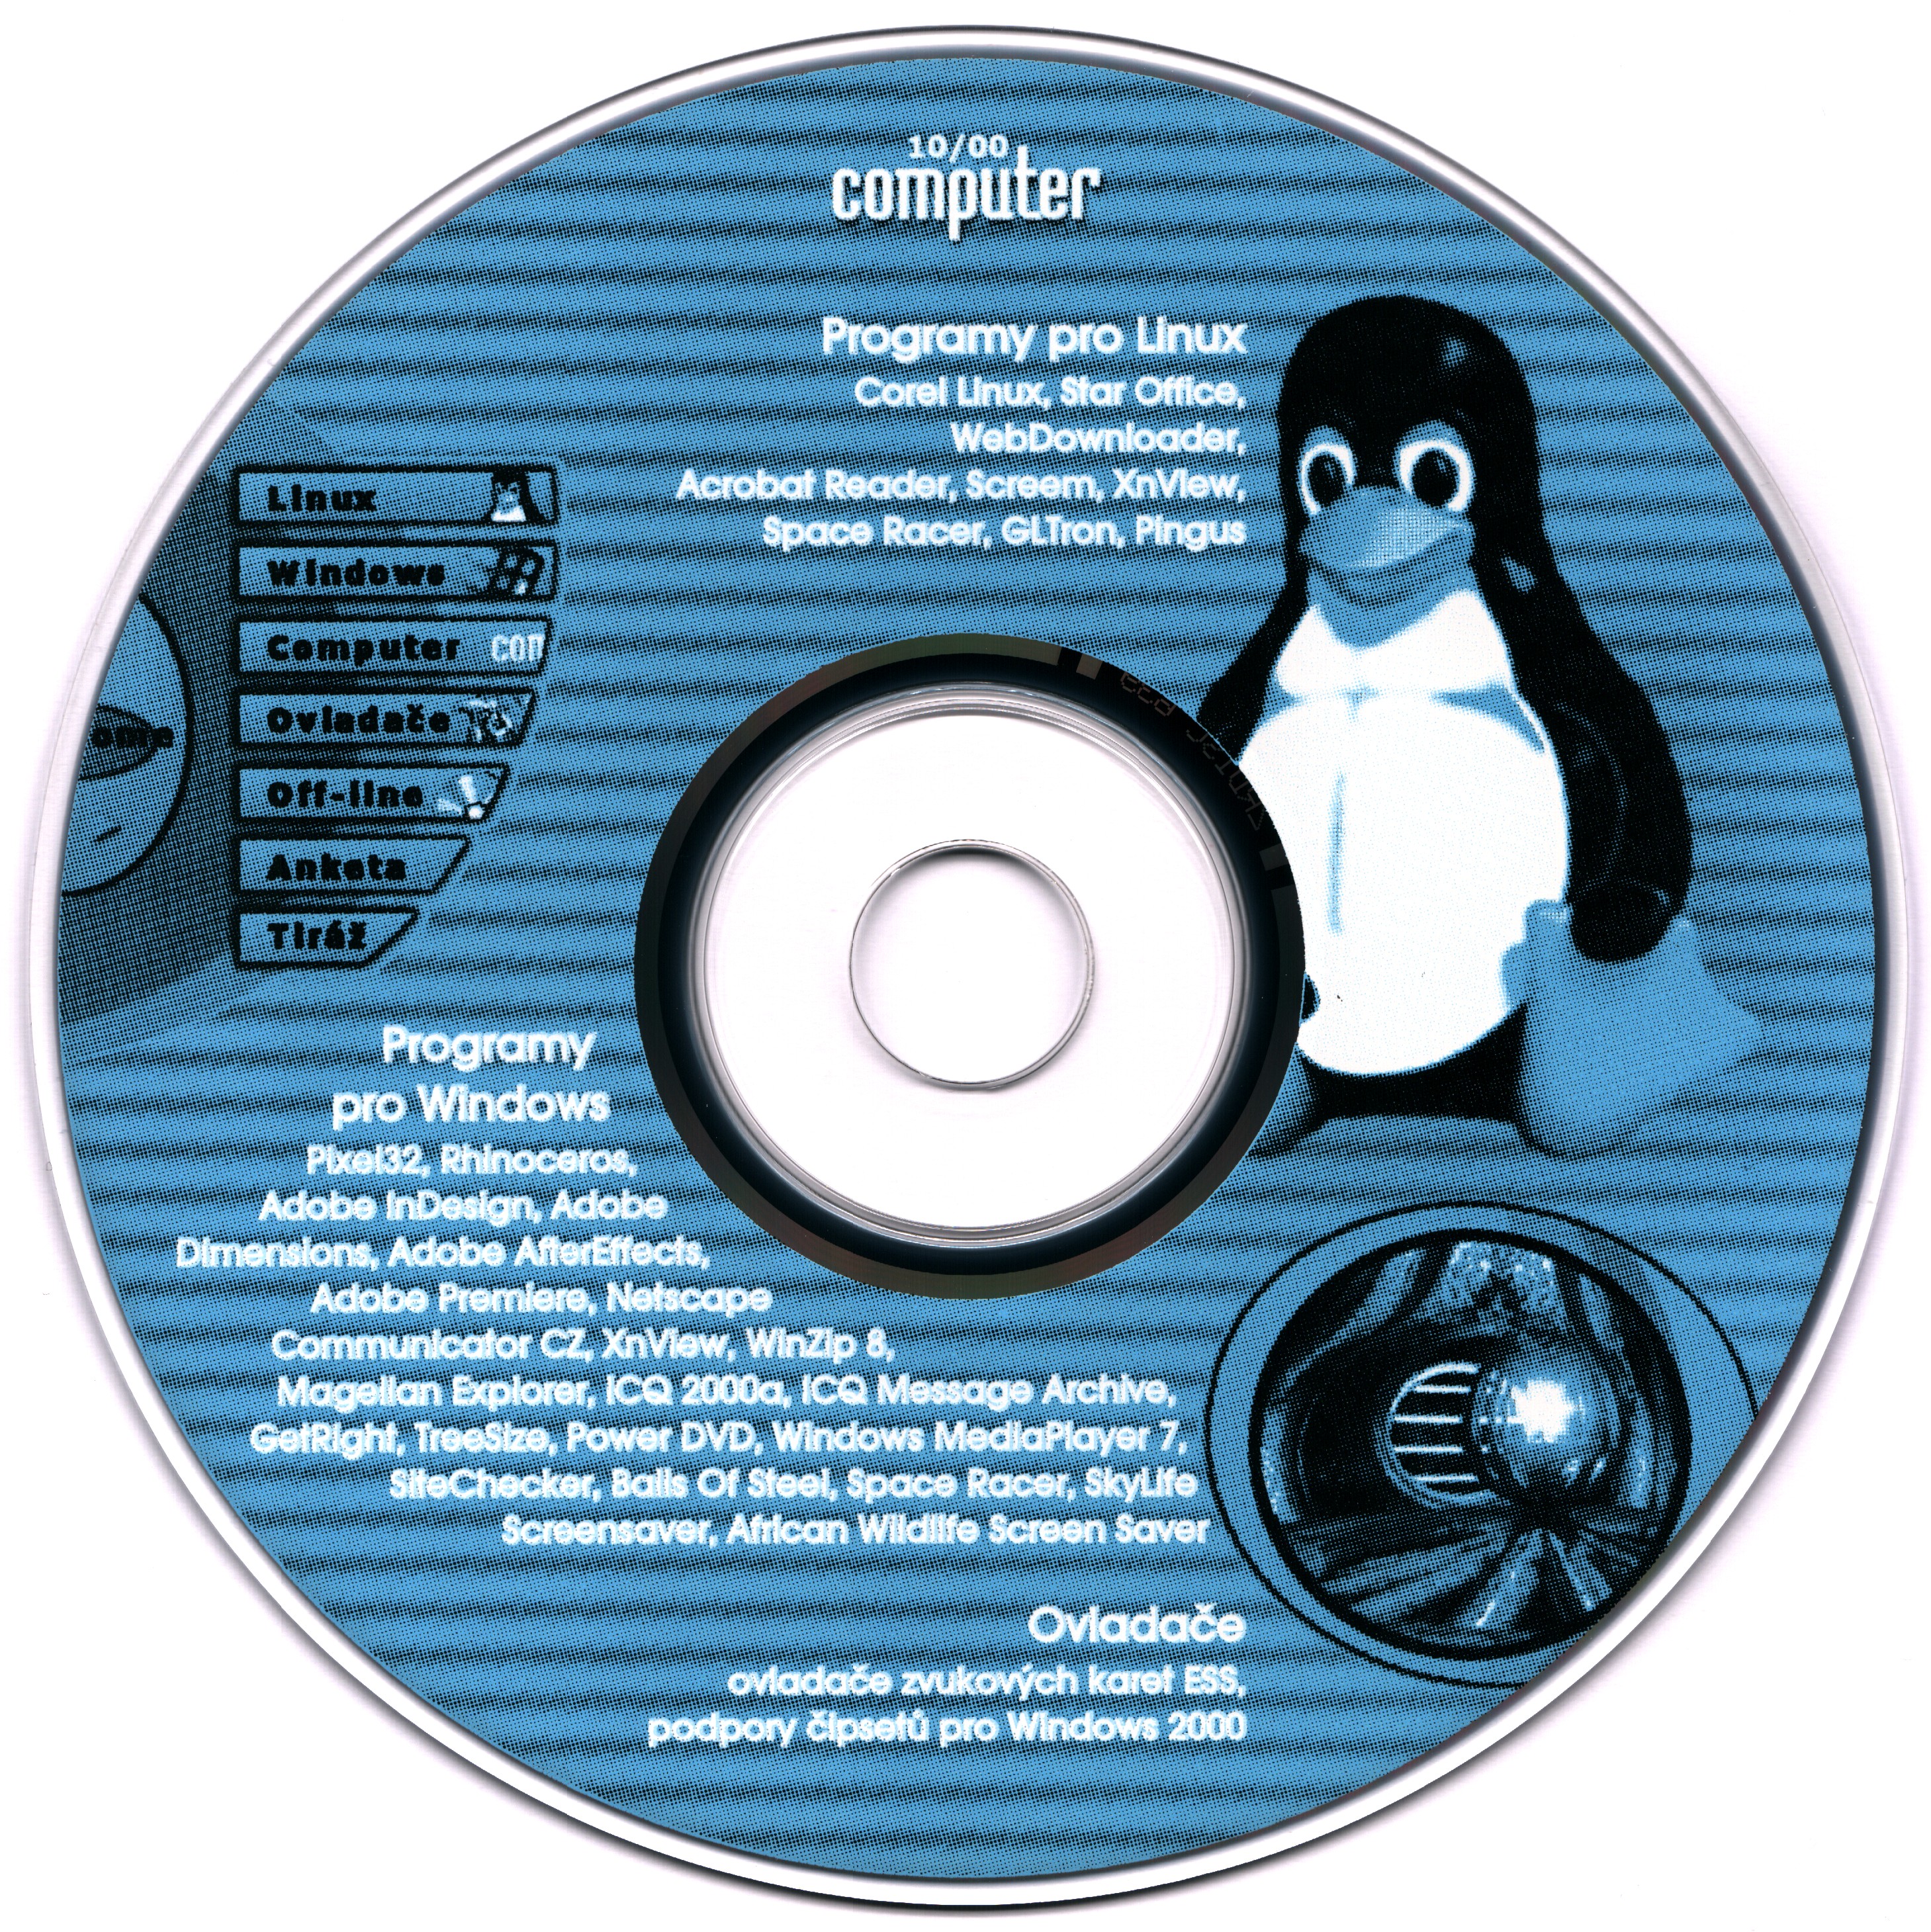 Computer 2000-10 CD-ROM coverdisc : Computer Press : Free Download